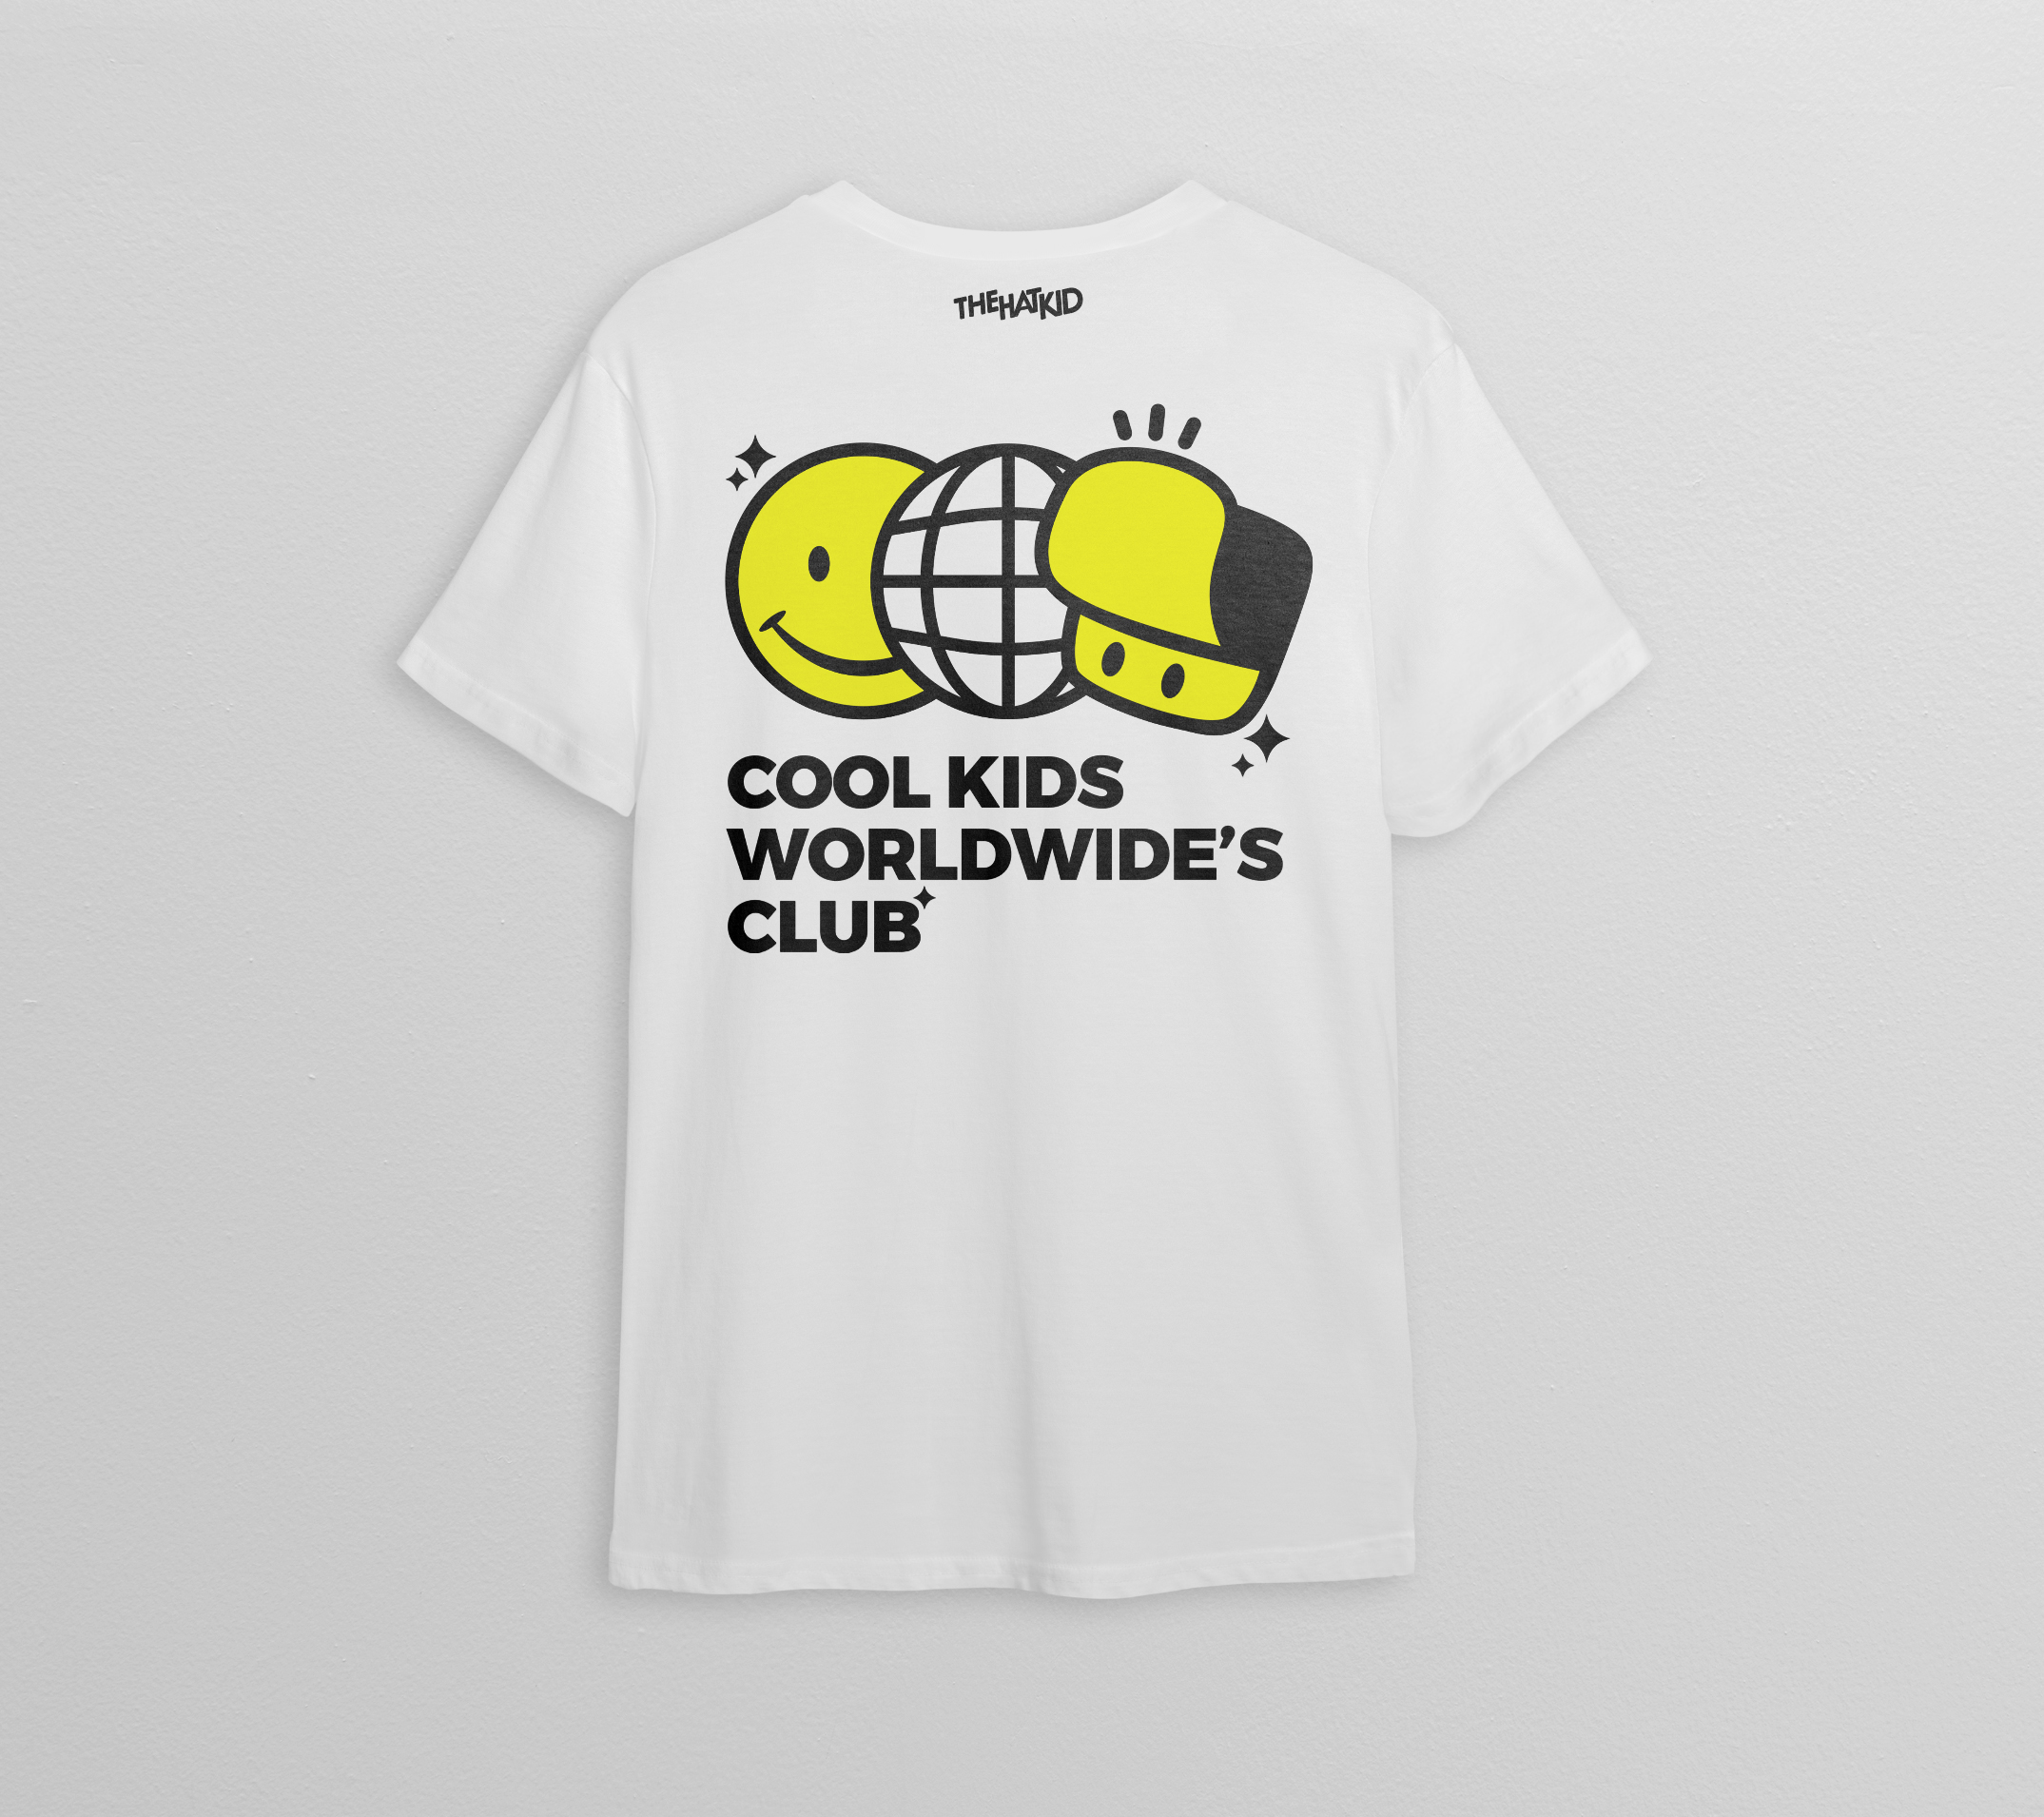 COOL KIDS THE – CLUB” T-Shirt HATKID WORLDWIDE\'S